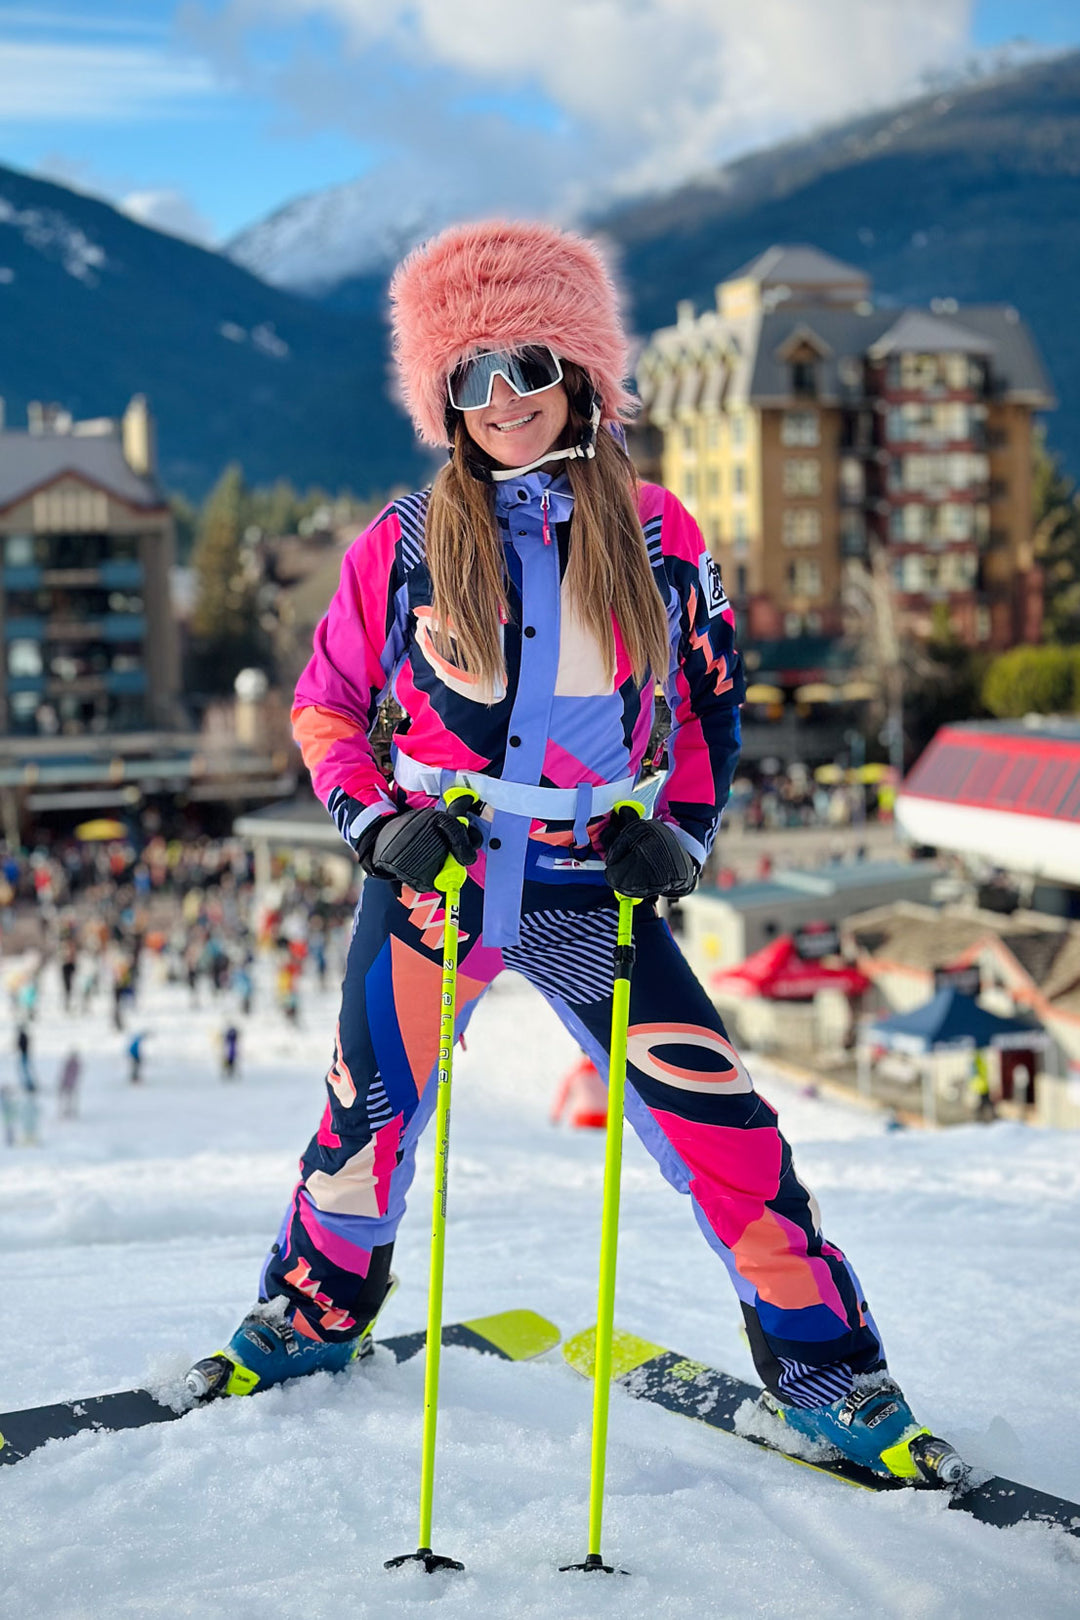 Hotstepper Female Ski Suit